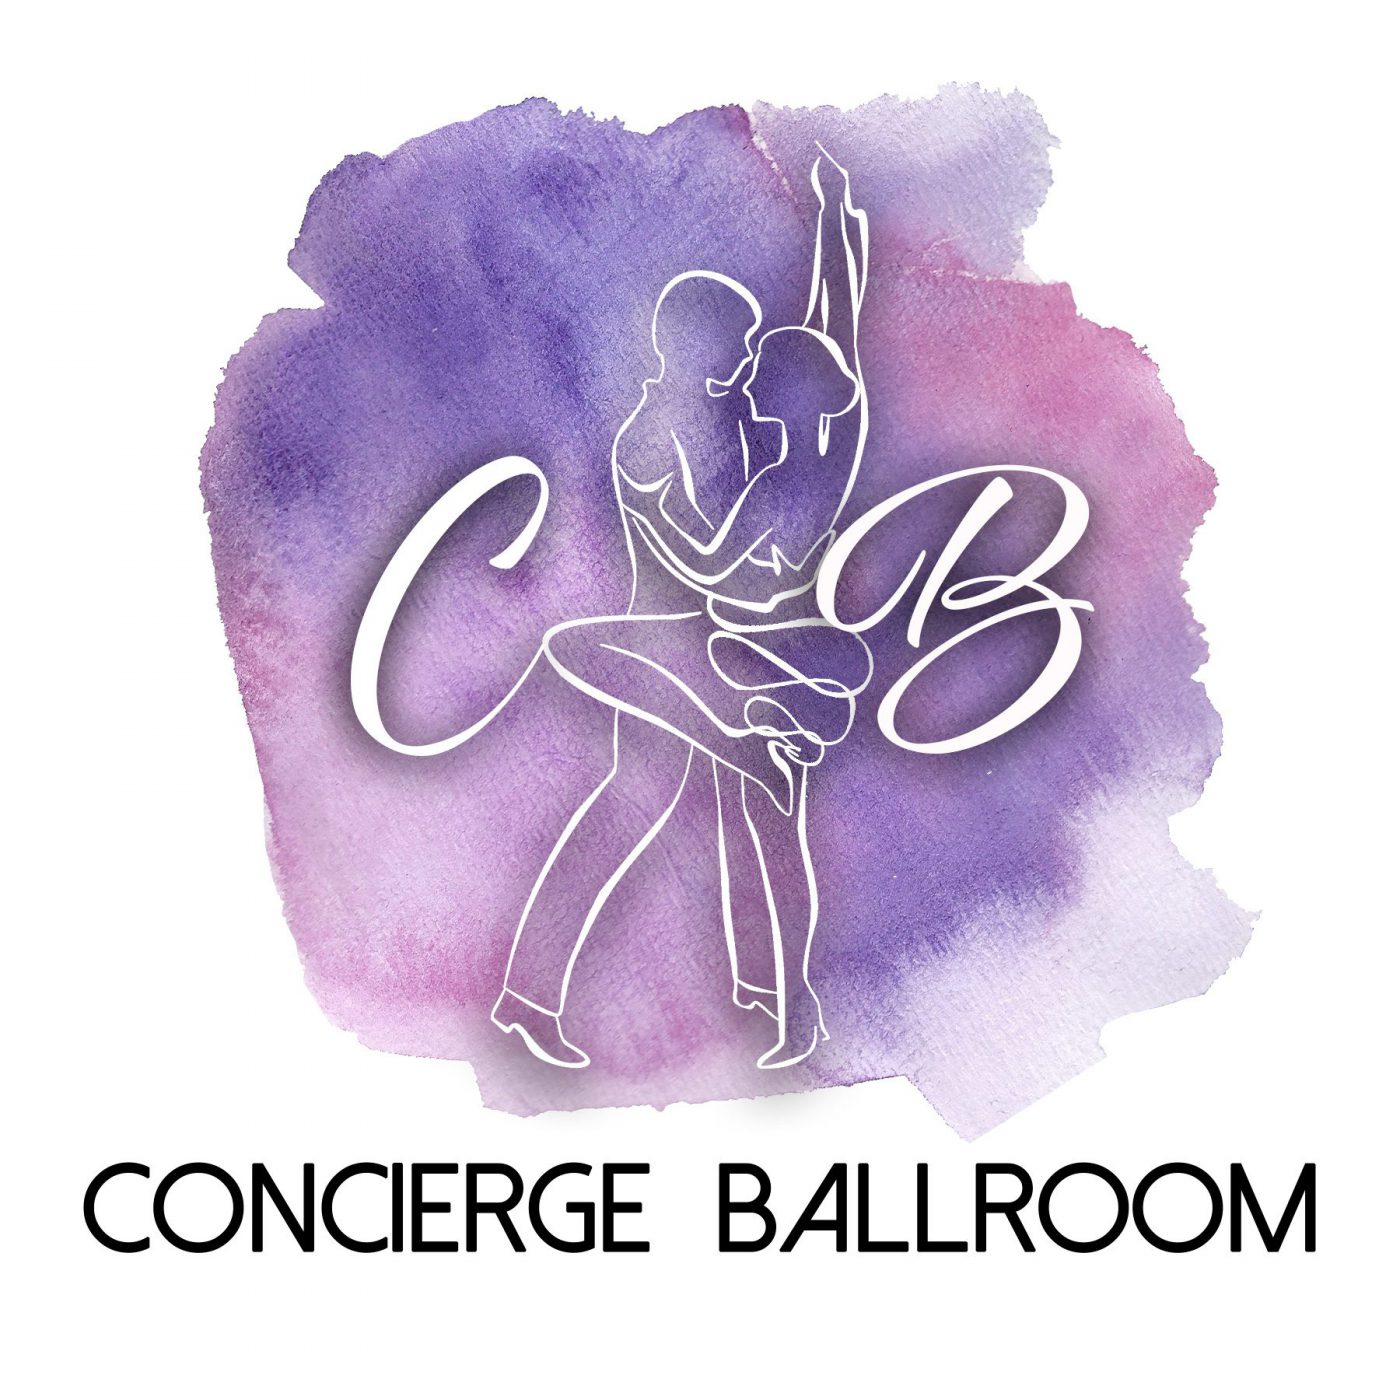 Concierge-Ballroom-LOGO-e1567268622245